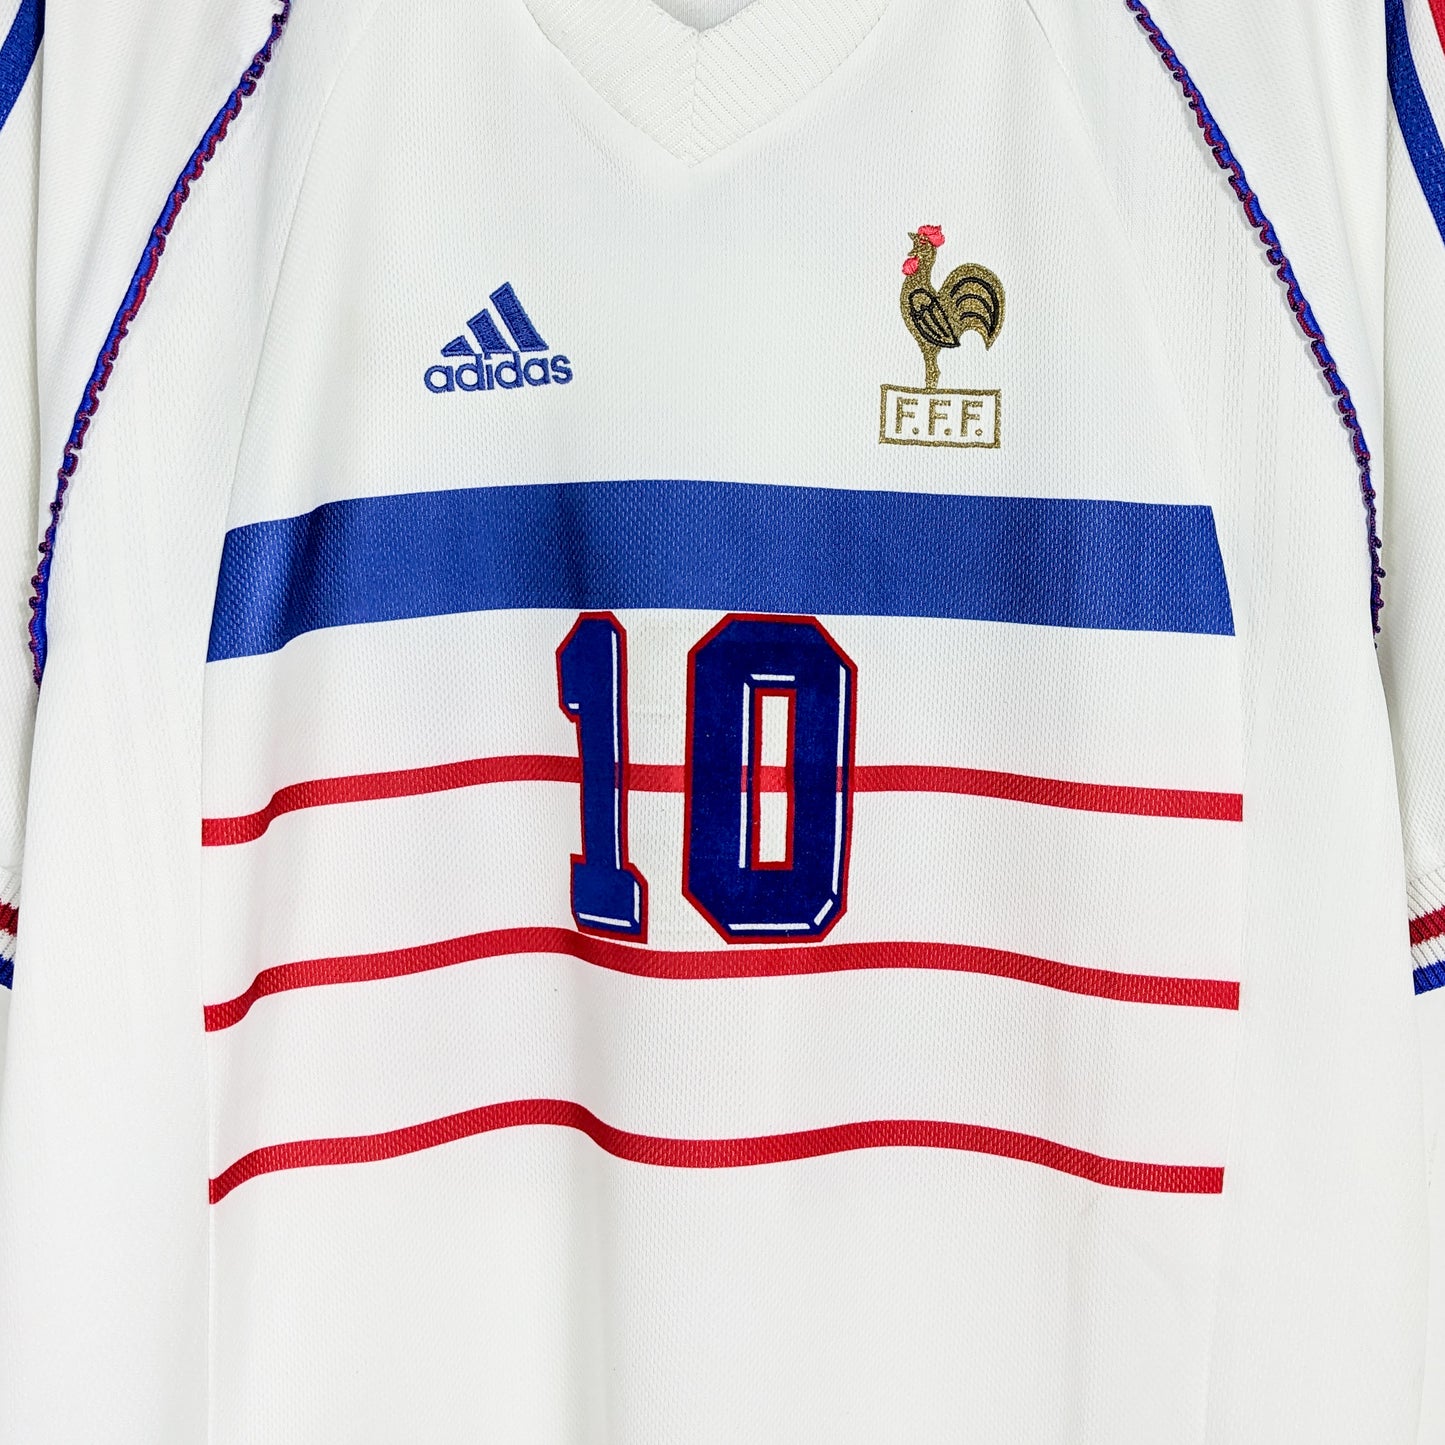 Authentic France 1998 Away - Zidane #10 Size M